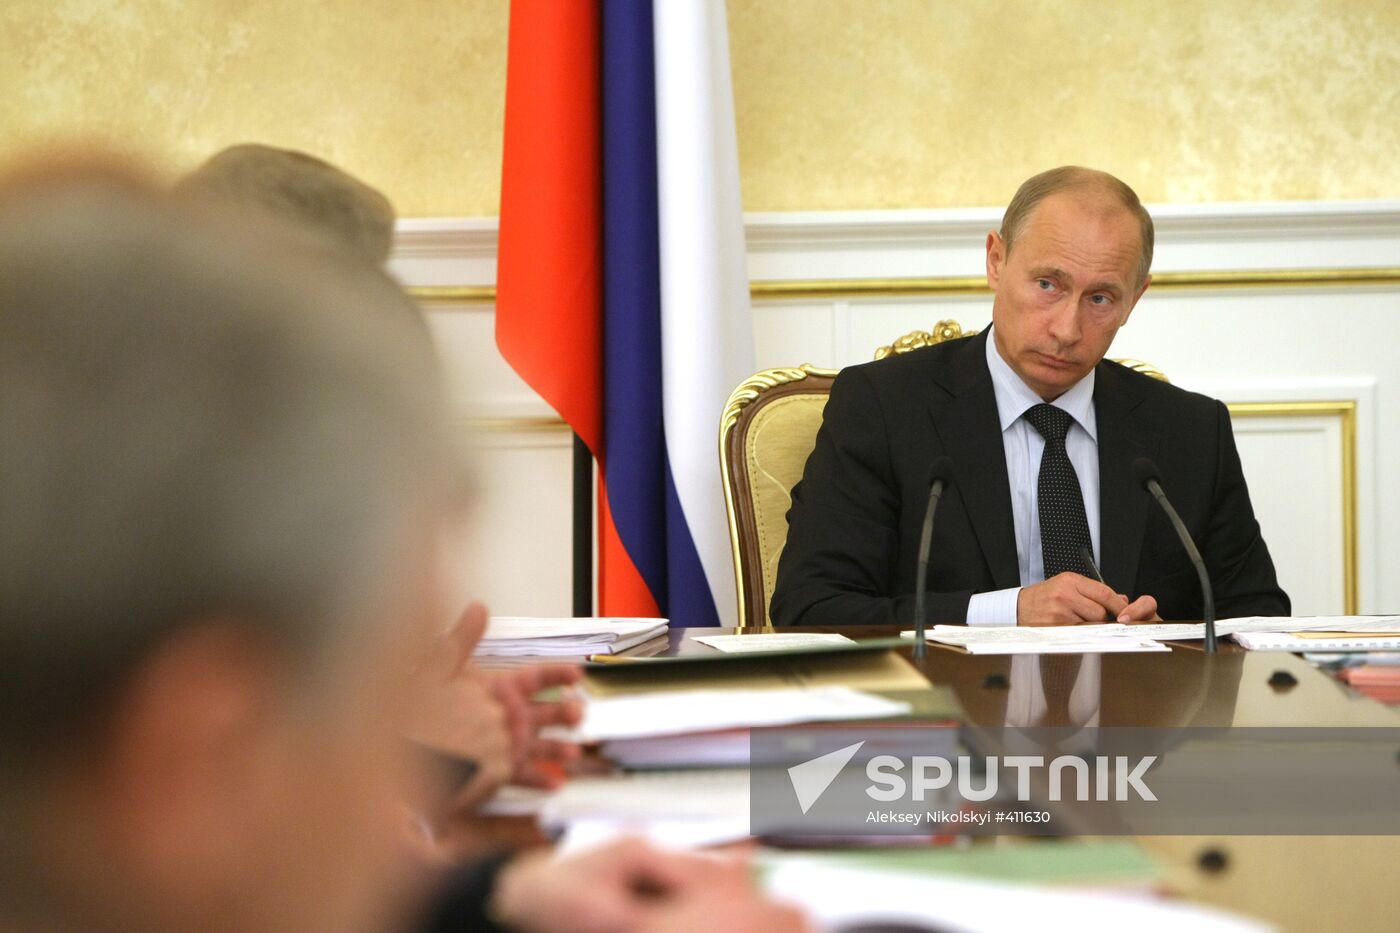 Vladimir Putin conducts government presidium session